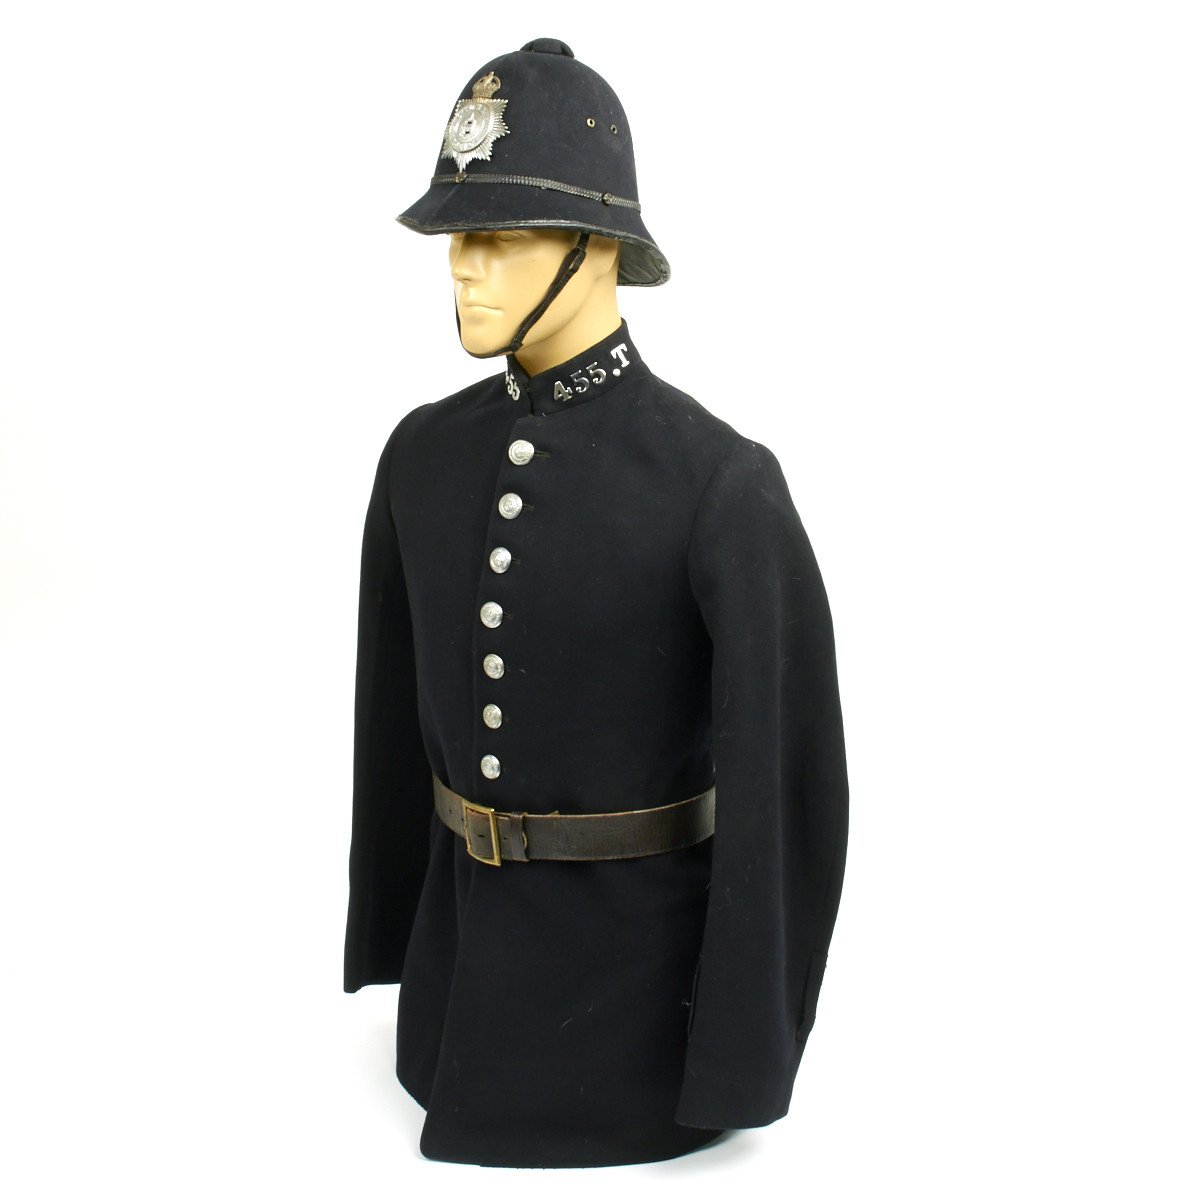 old british police